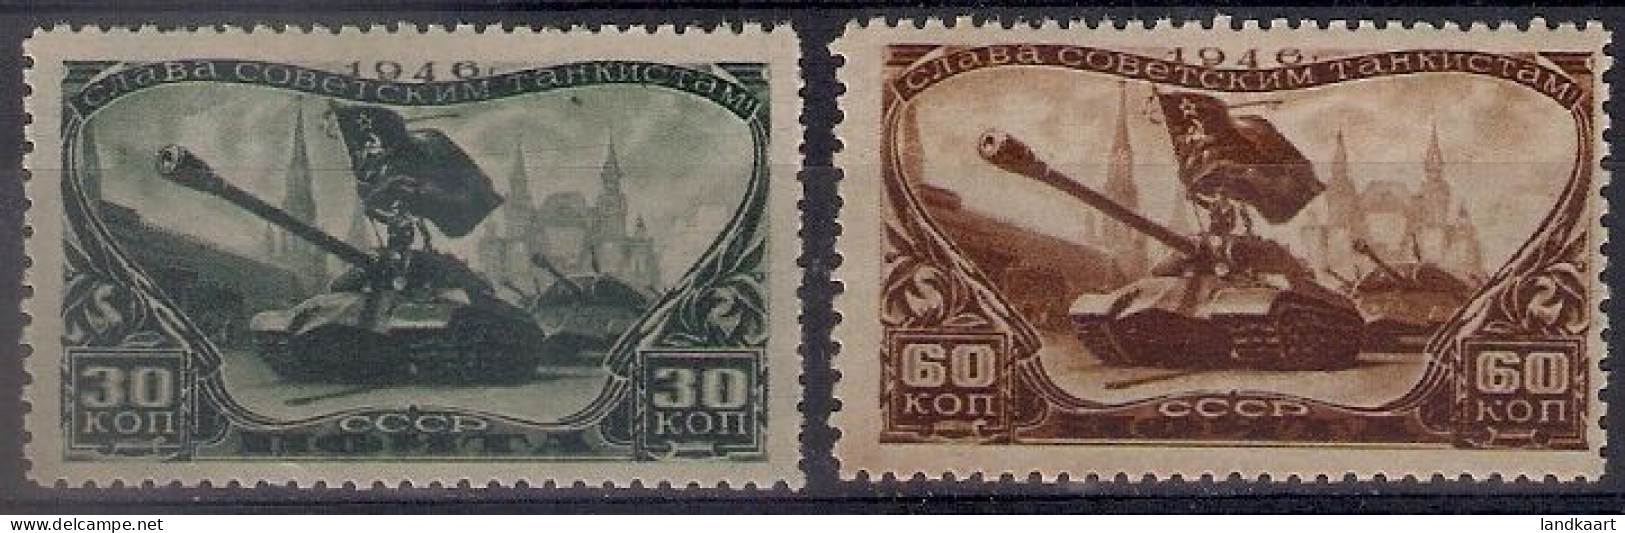 Russia 1946, Michel Nr 1064-65, MNH OG - Ungebraucht